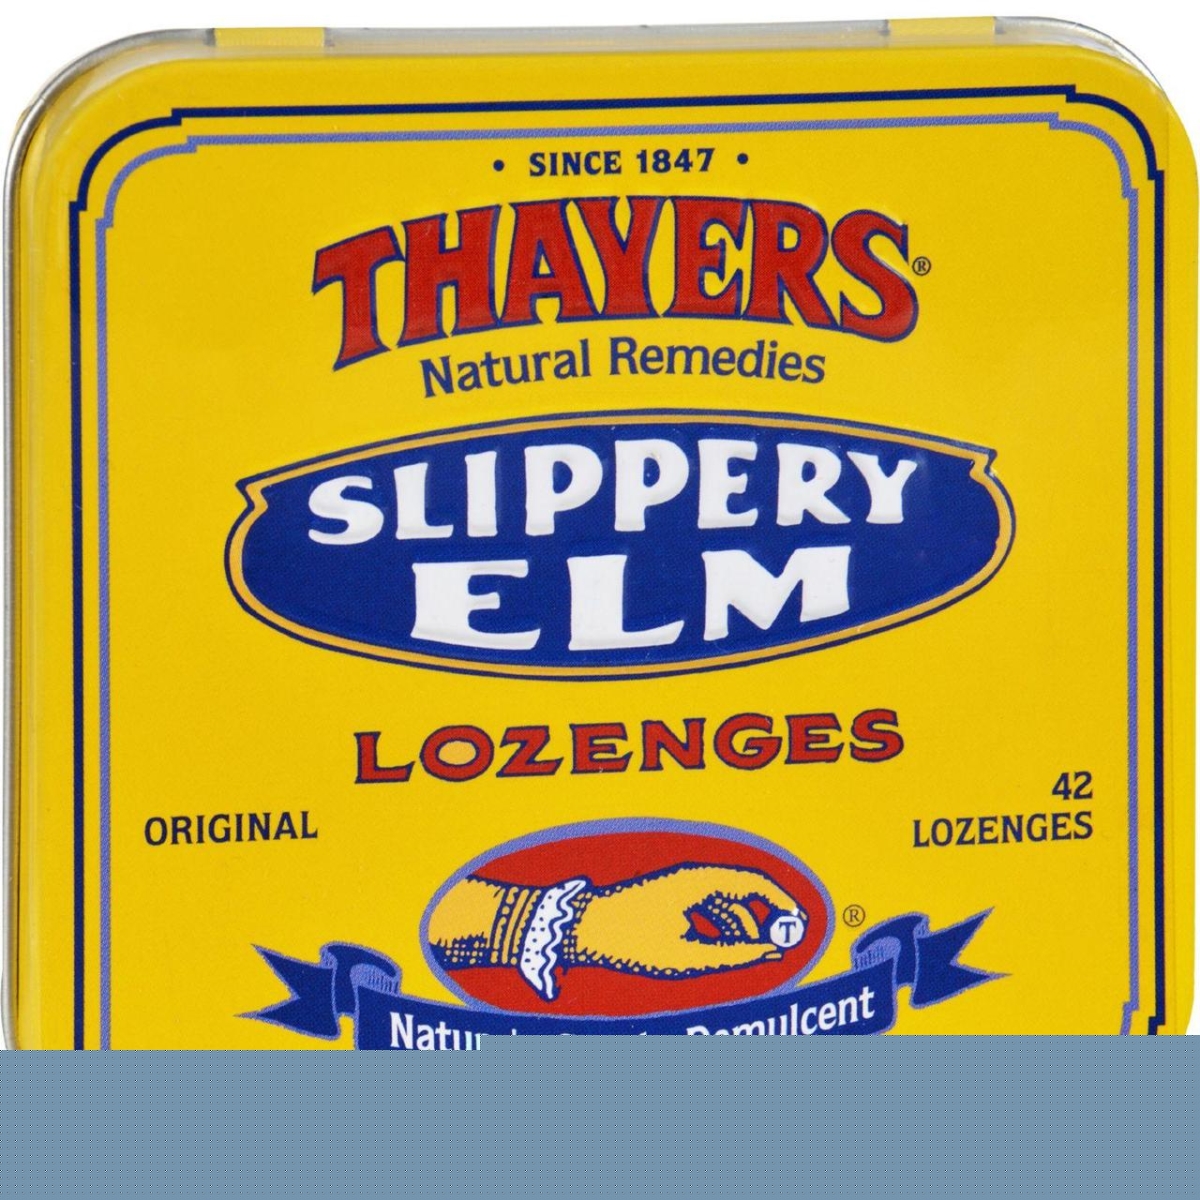 Hg0900522 Slippery Elm Lozenges Original, 42 Lozenges - Case Of 10